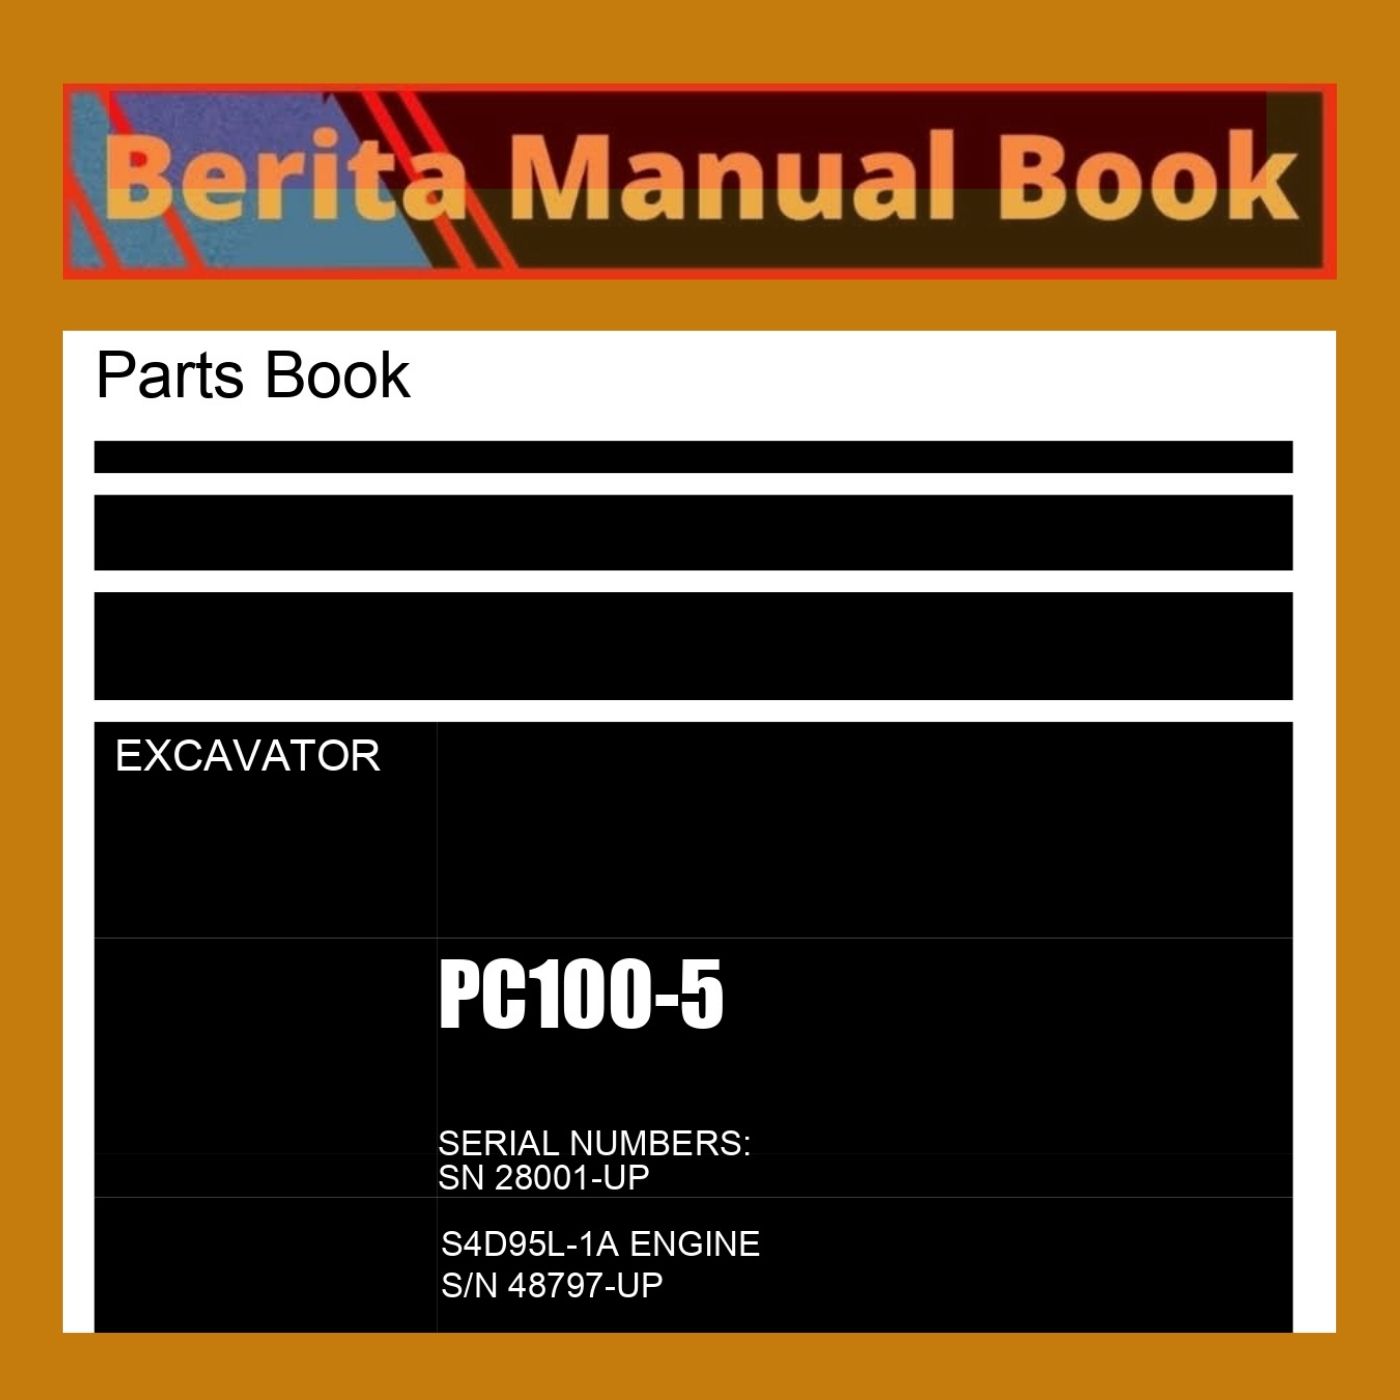 Catalog parts book komatsu pc100-5